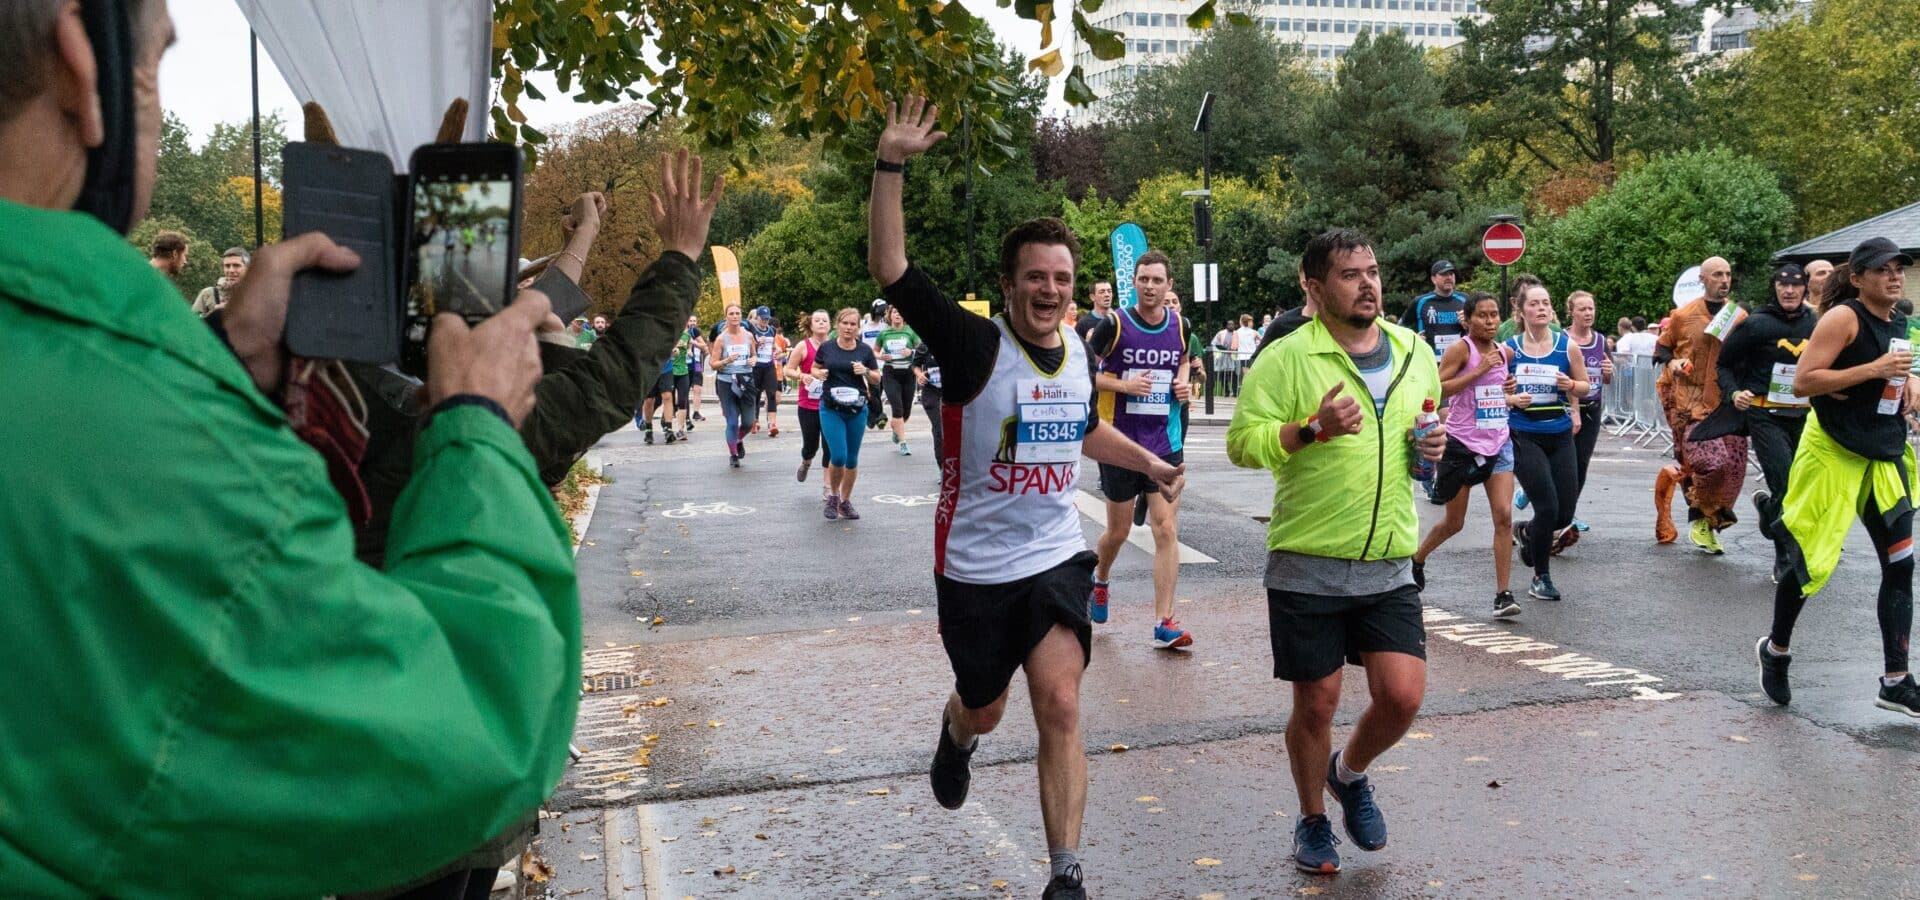 Man enthusiastically running the Royal Parks Half Marathon for SPANA